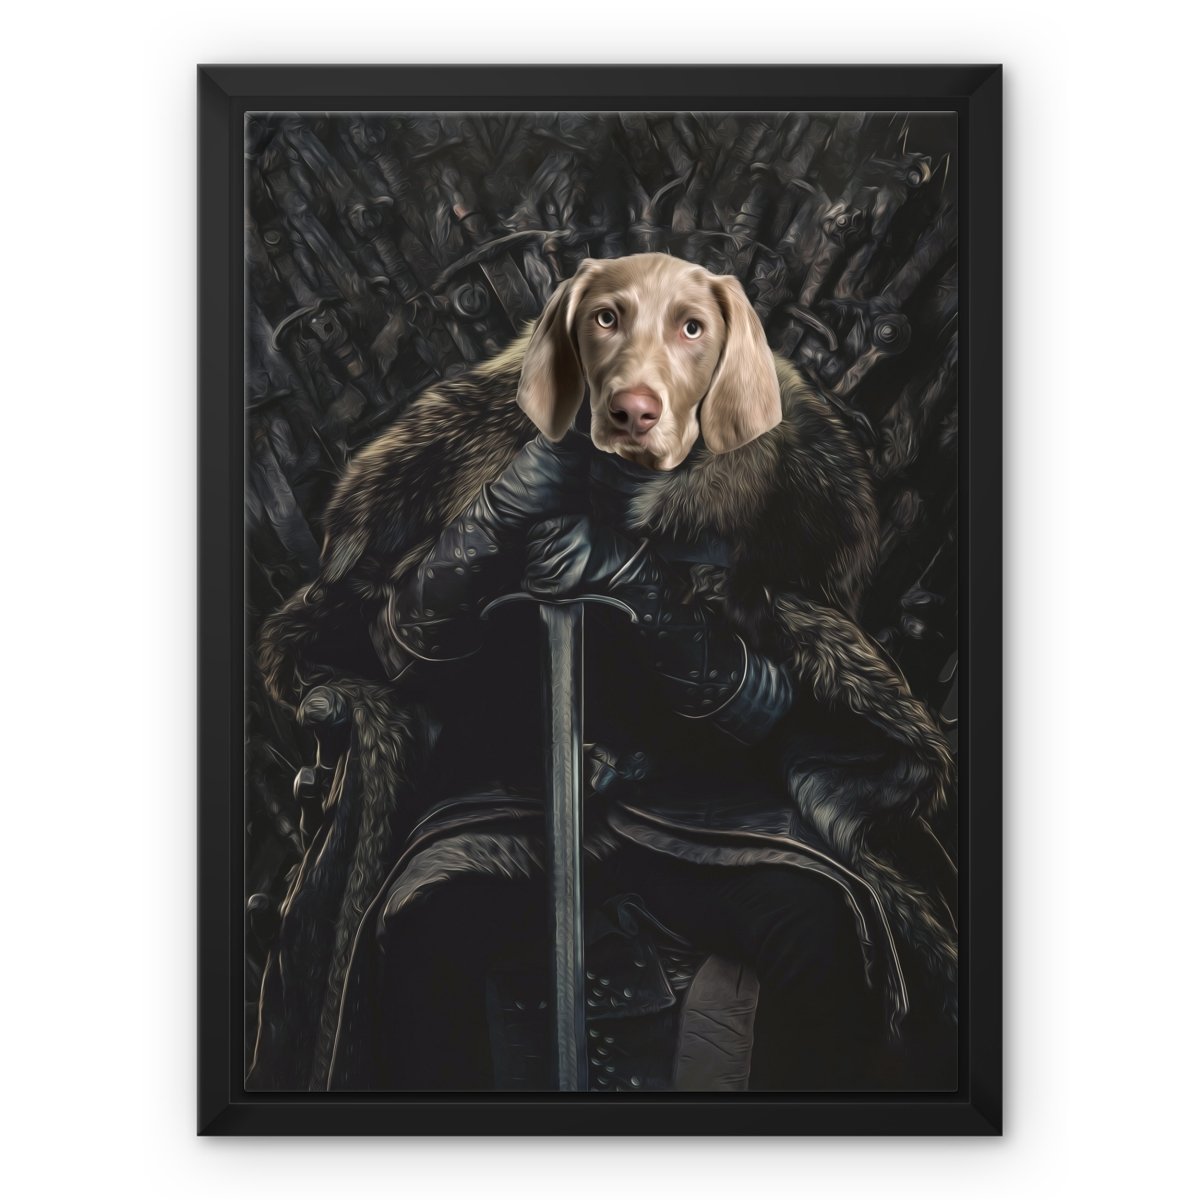 The Night King: Custom Pet Canvas - Paw & Glory - #pet portraits# - #dog portraits# - #pet portraits uk#paw & glory, pet portraits canvas,personalized dog and owner canvas uk, dog canvas, pet photo to canvas, custom pet art canvas, canvas dog carrier